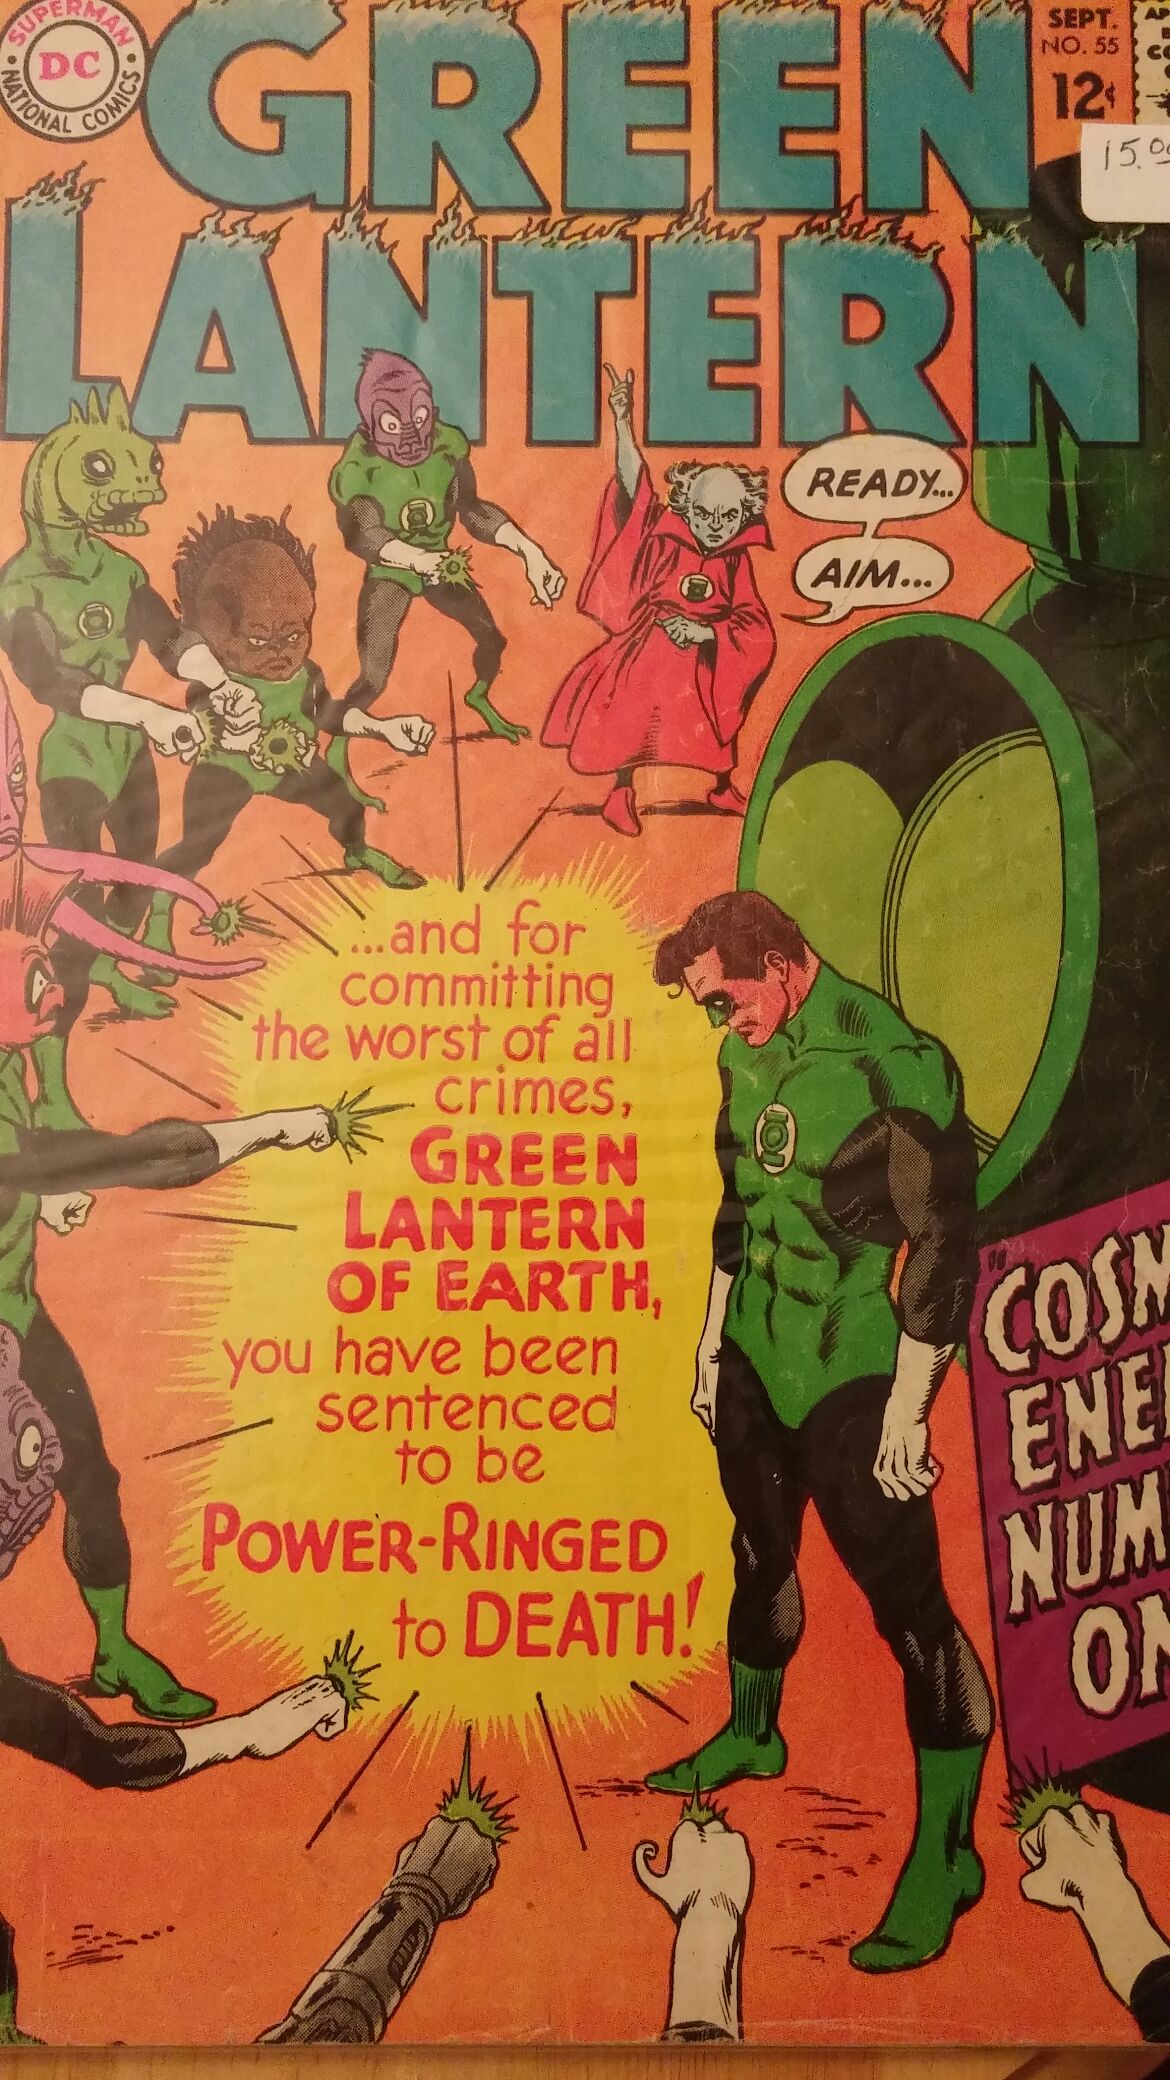 Green Lantern - DC Comics (55 - Sep 1967) comic book collectible - Main Image 1